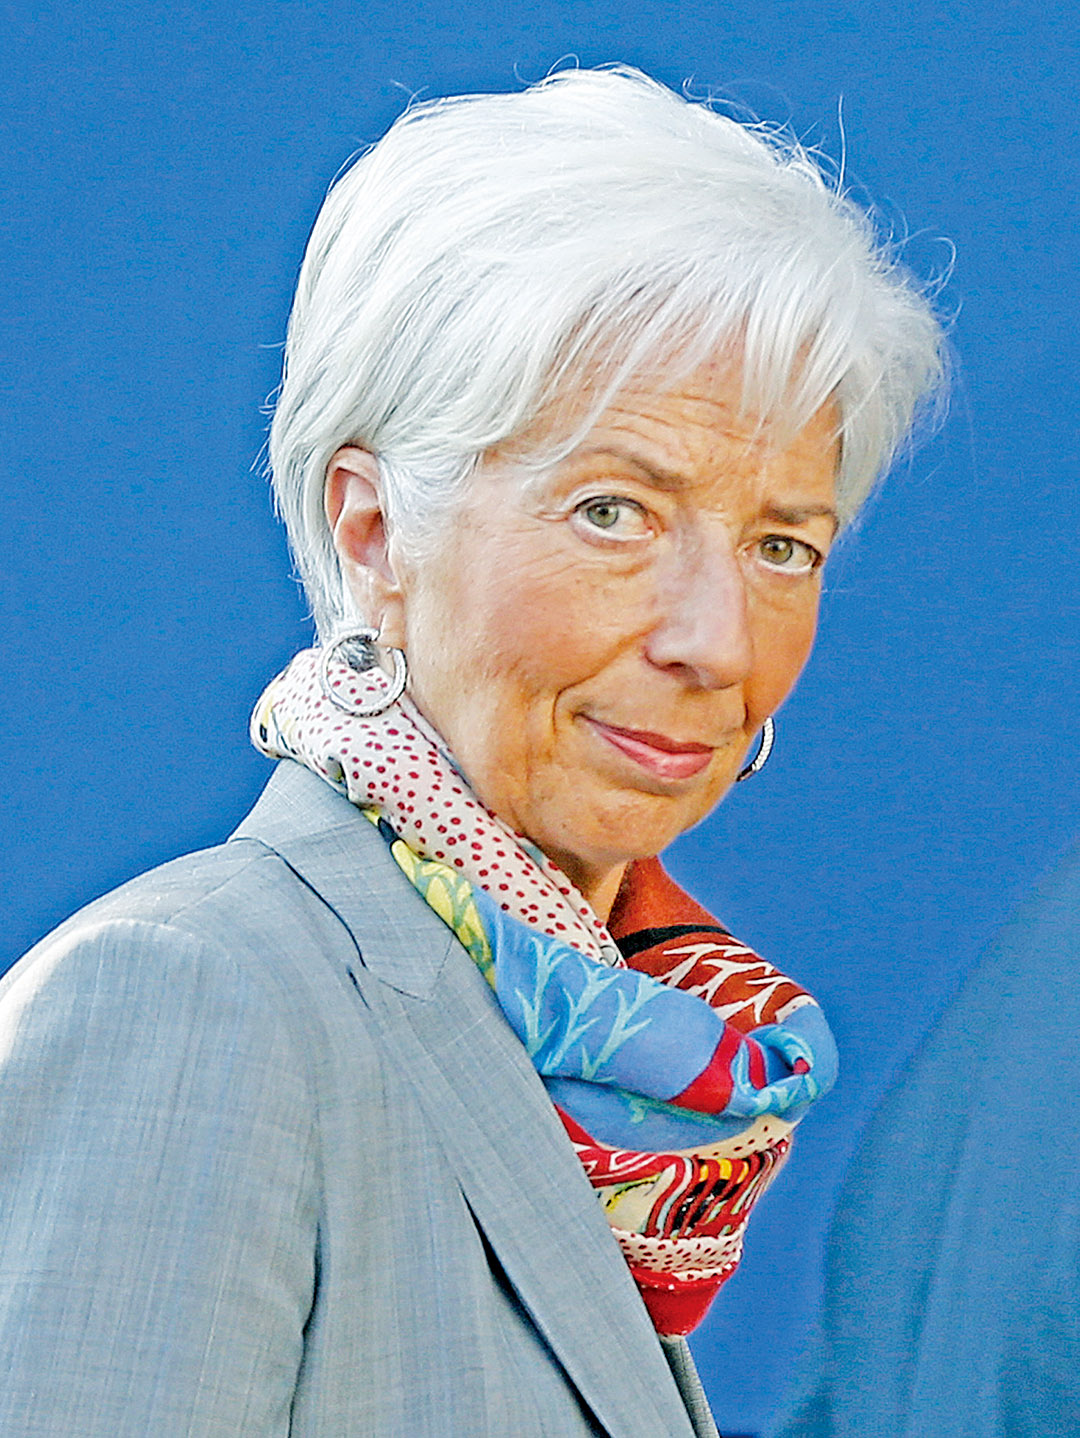 IMF籲全球打擊貪污